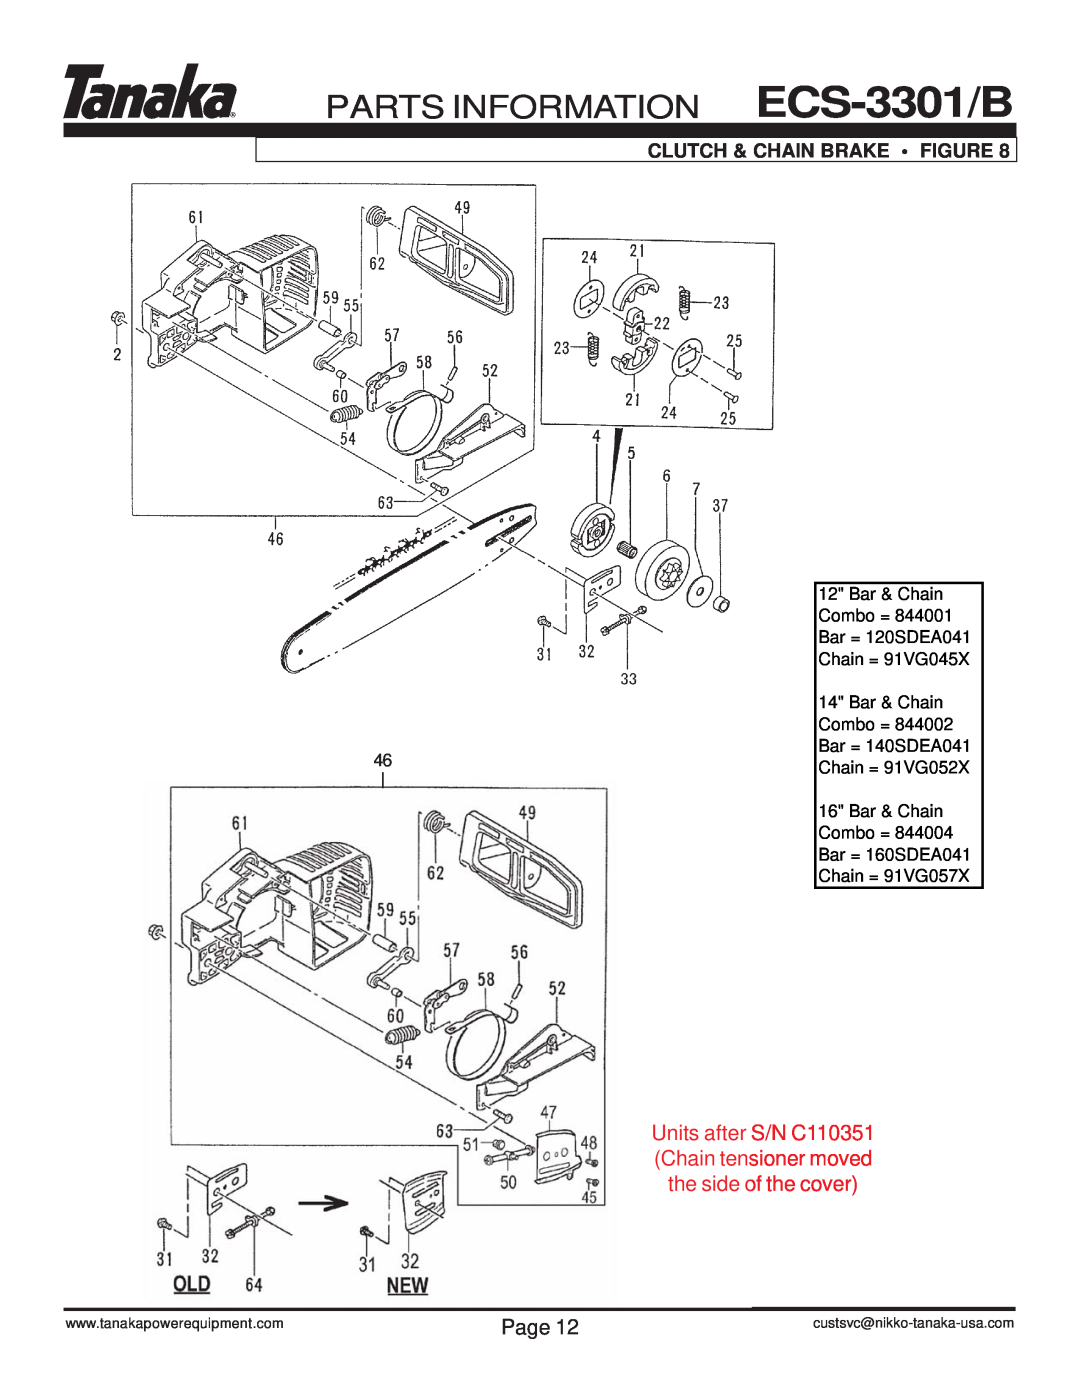 Tanaka manual Clutch & Chain Brake Figure, PARTS INFORMATION ECS-3301/B, Page 